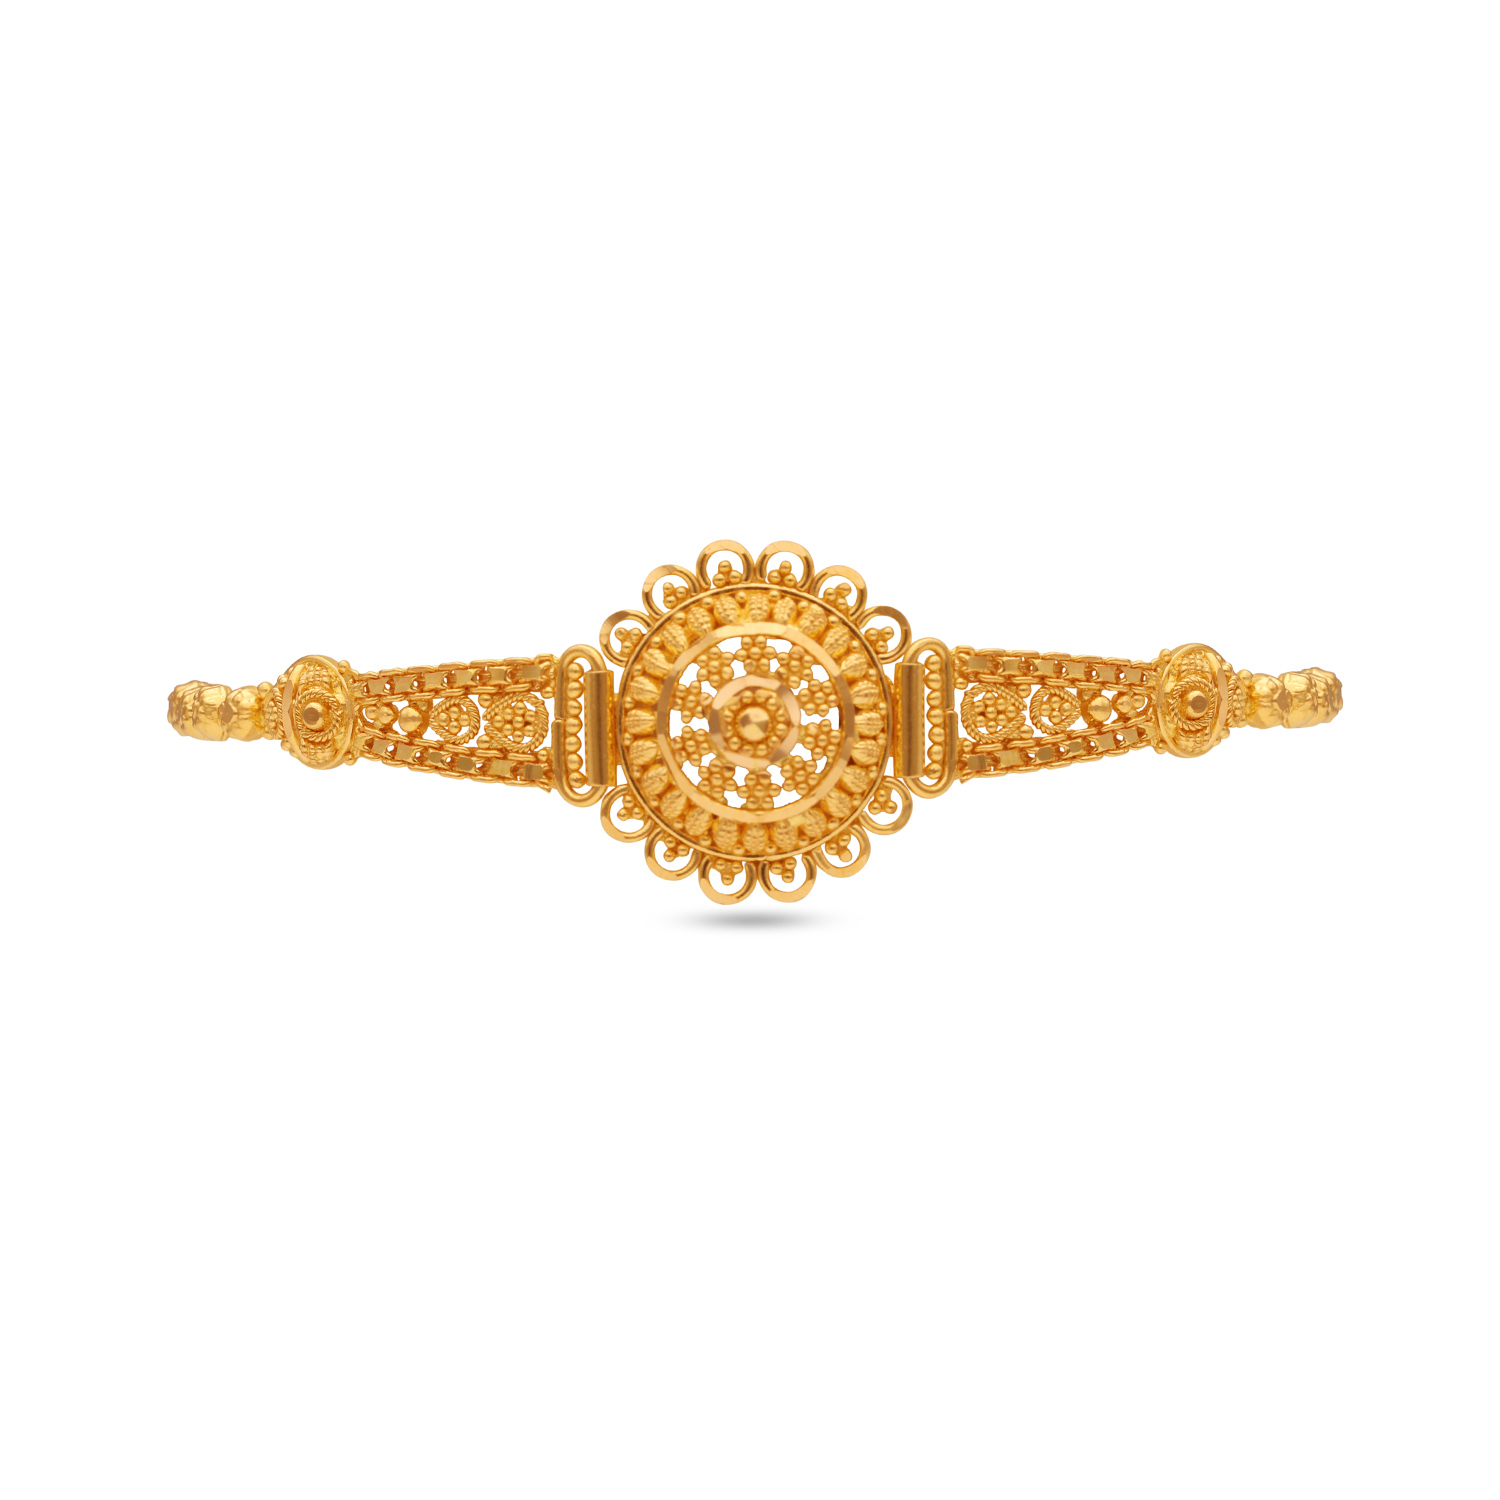 ruby bracelet aabi jewels 22 karat bis hallmark gold bracelet fo